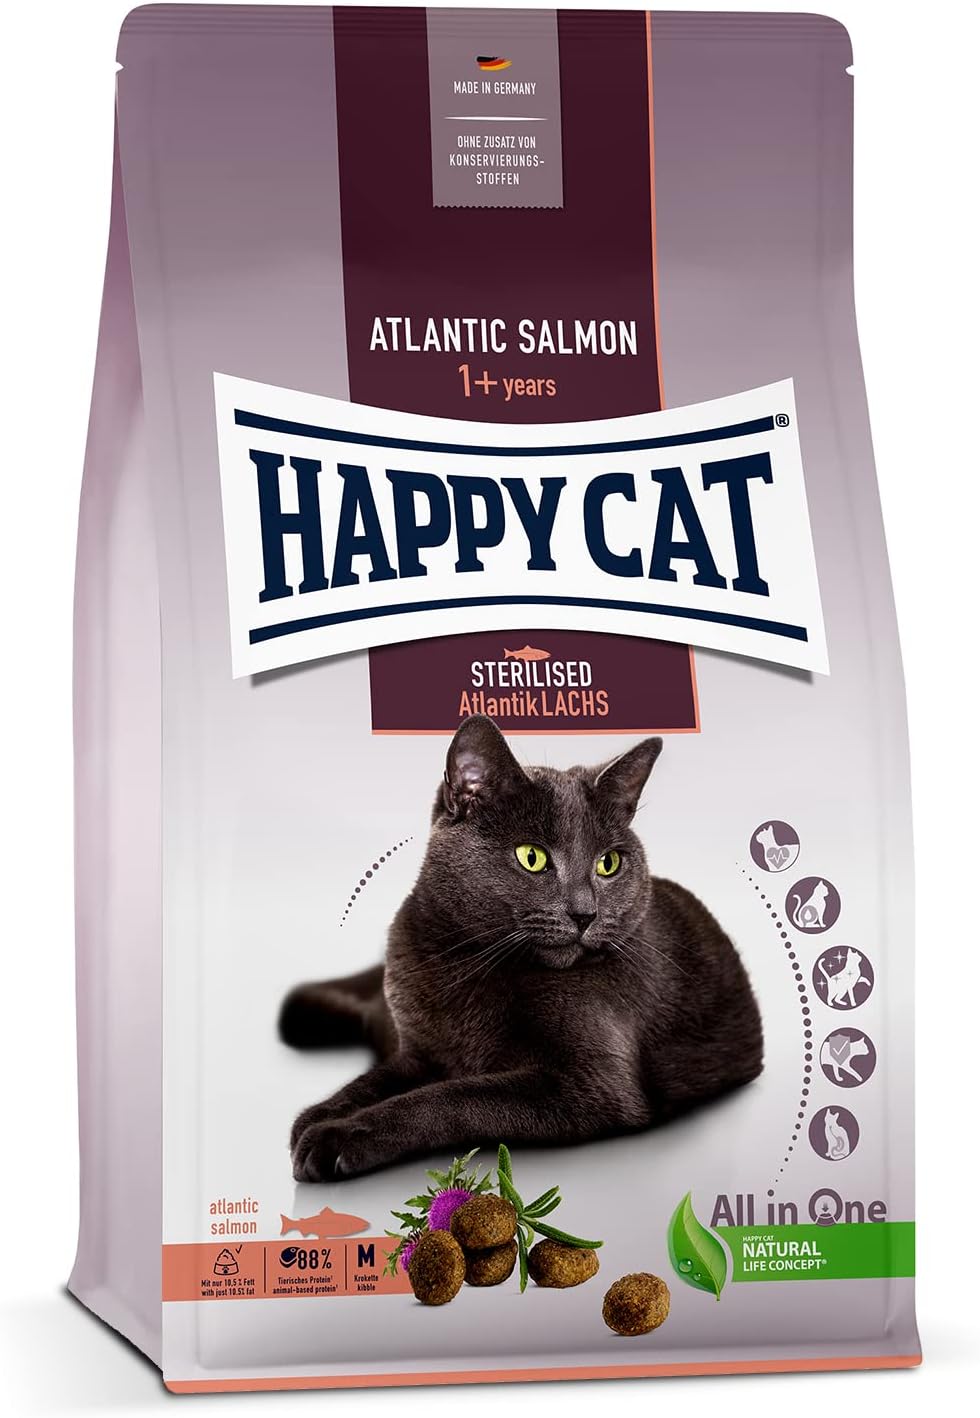 Happy Cat Adult Sterilised Atlantik-Lachs (Atlantic Salmon) - 1.3 KG